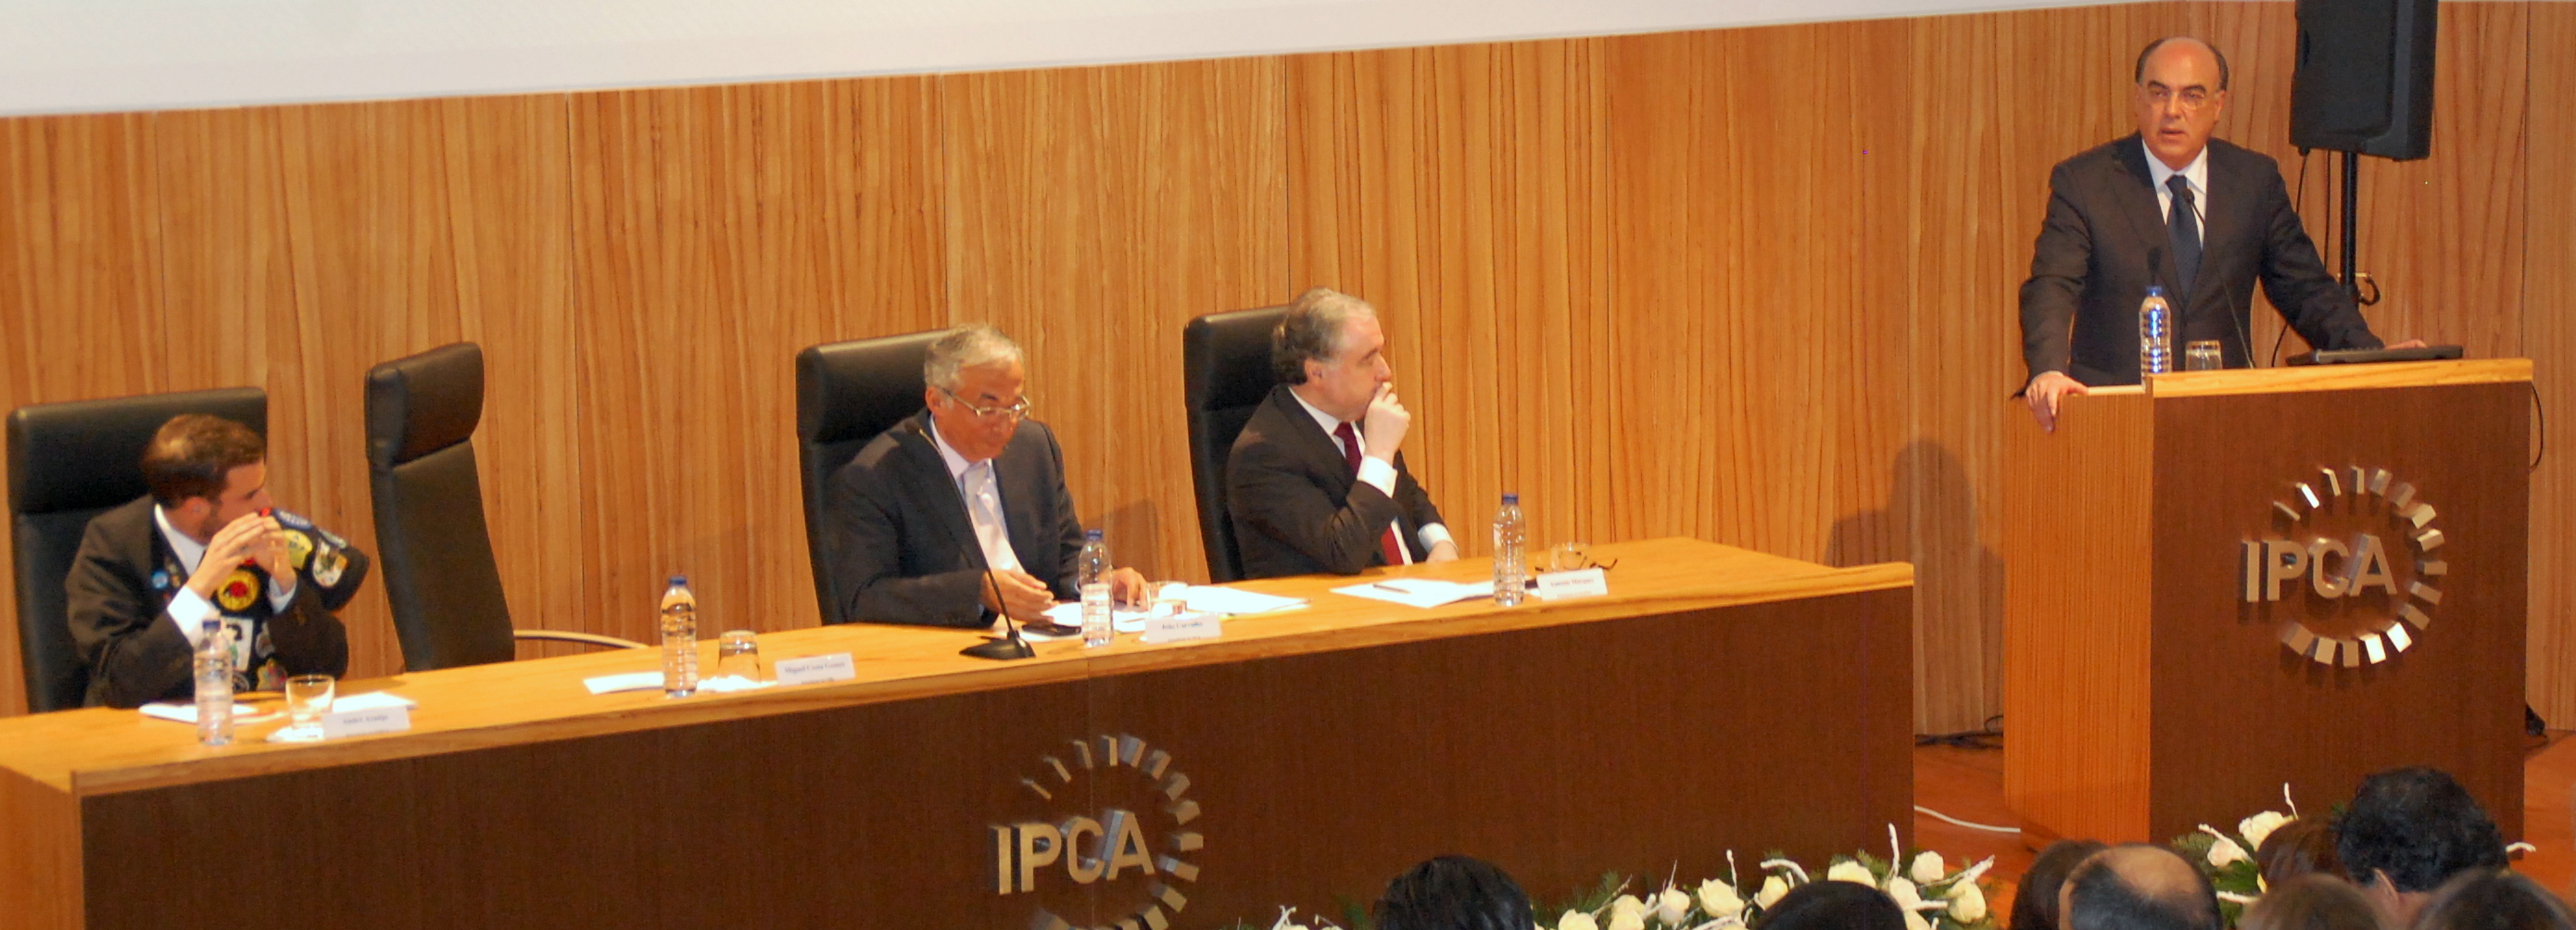 Presidente da Câmara reafirma apoio do Município ao IPCA